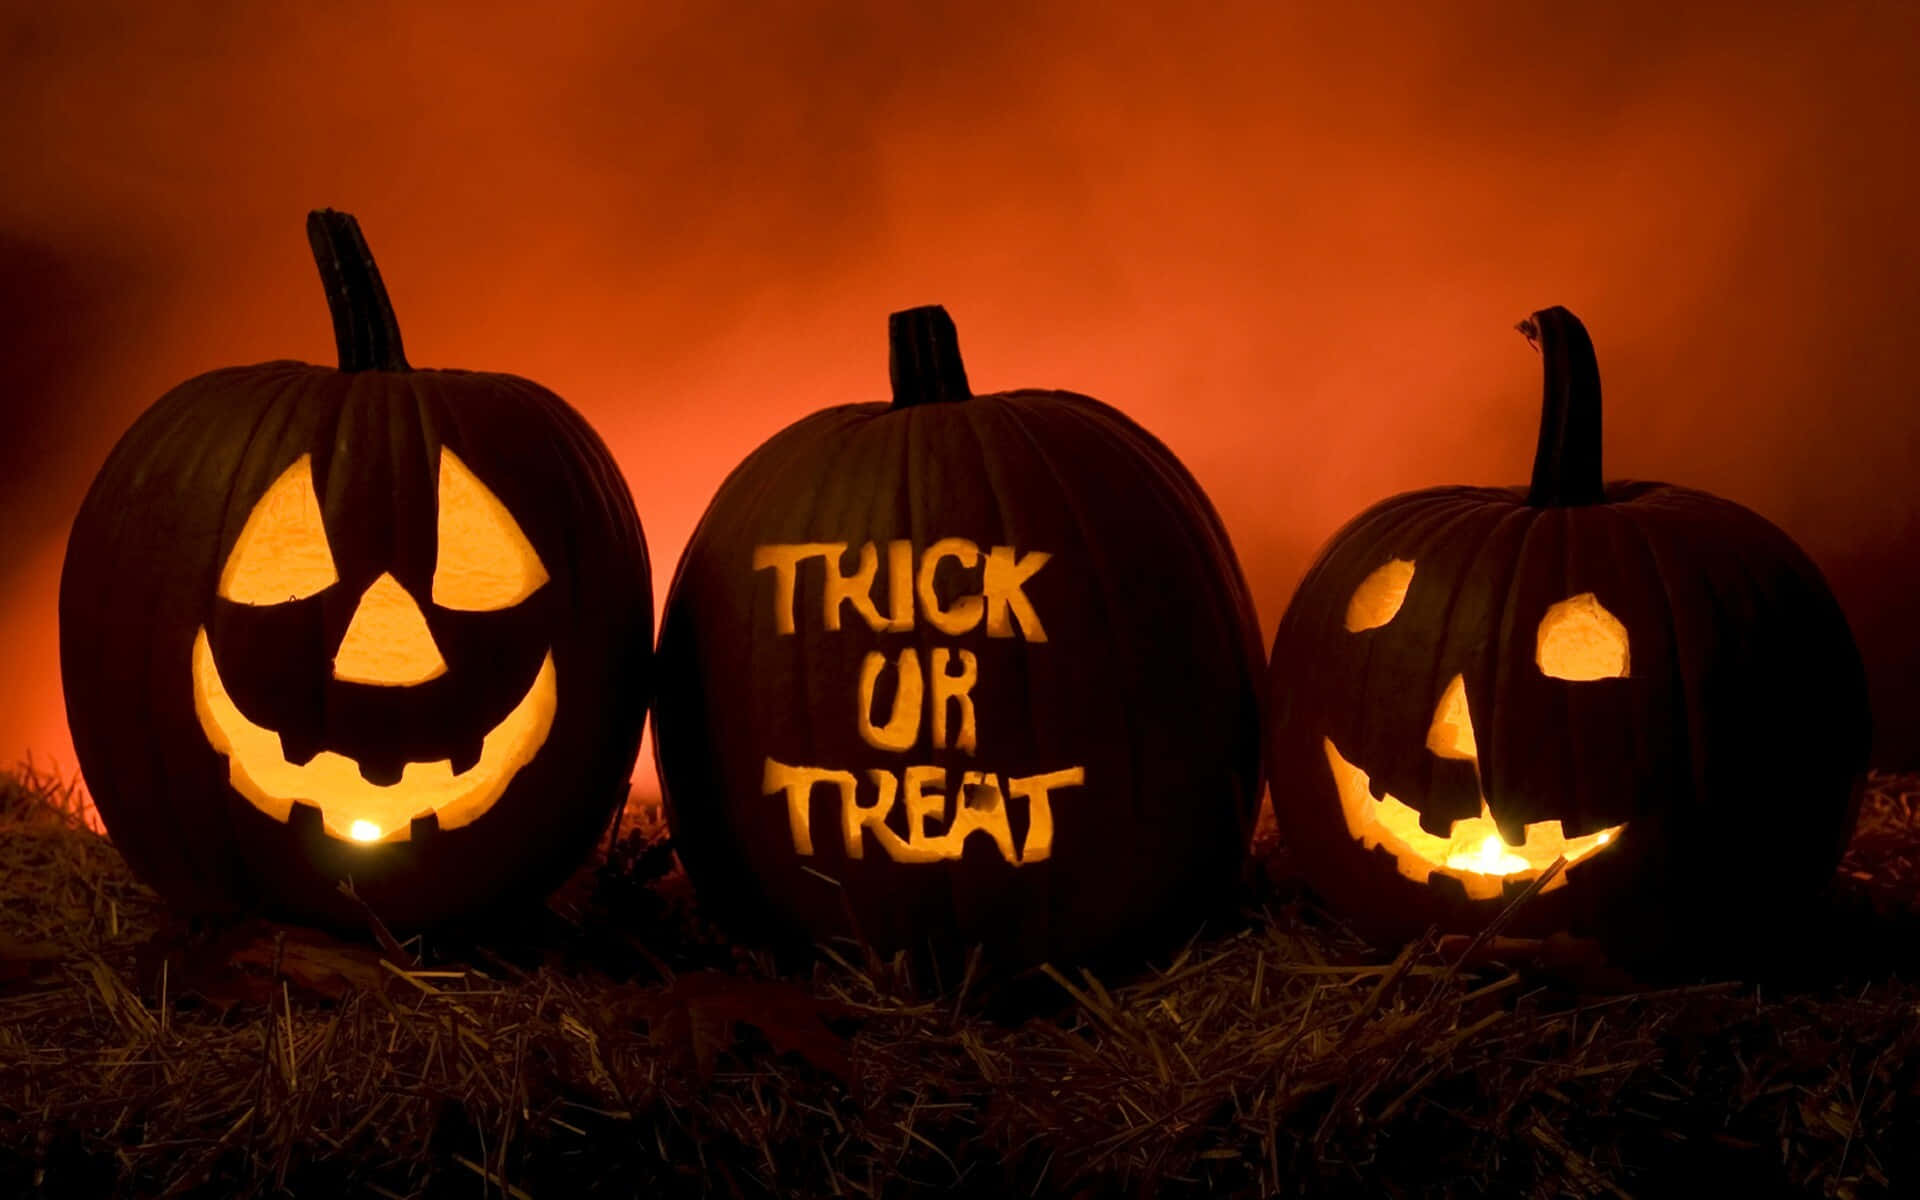 Kids in spooky costumes enjoying Trick or Treat on Halloween night